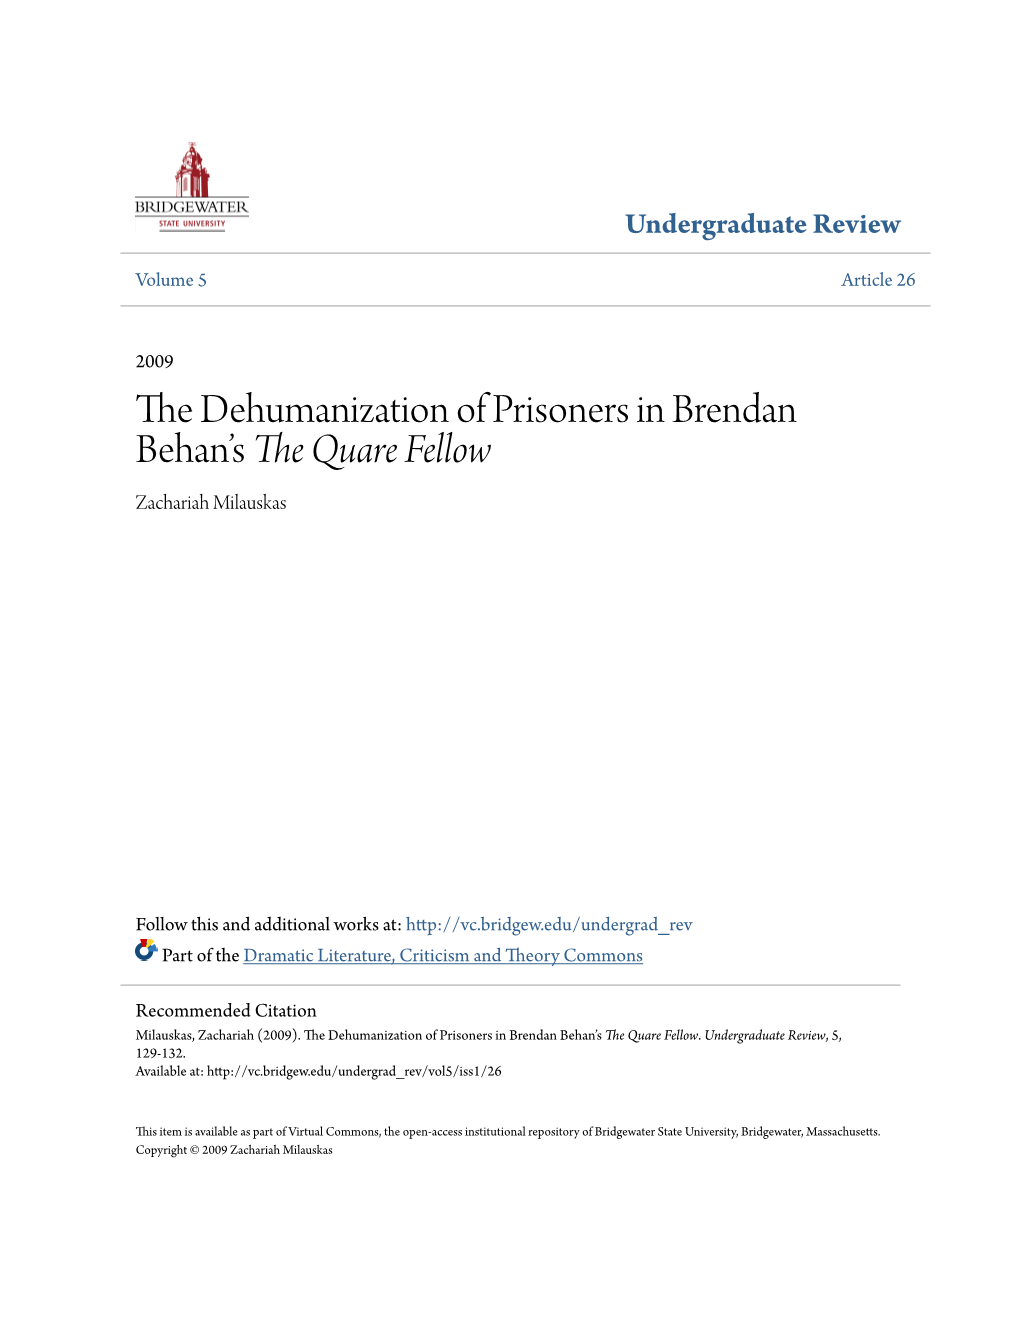 The Dehumanization of Prisoners in Brendan Behan's &lt;Em&gt;The Quare